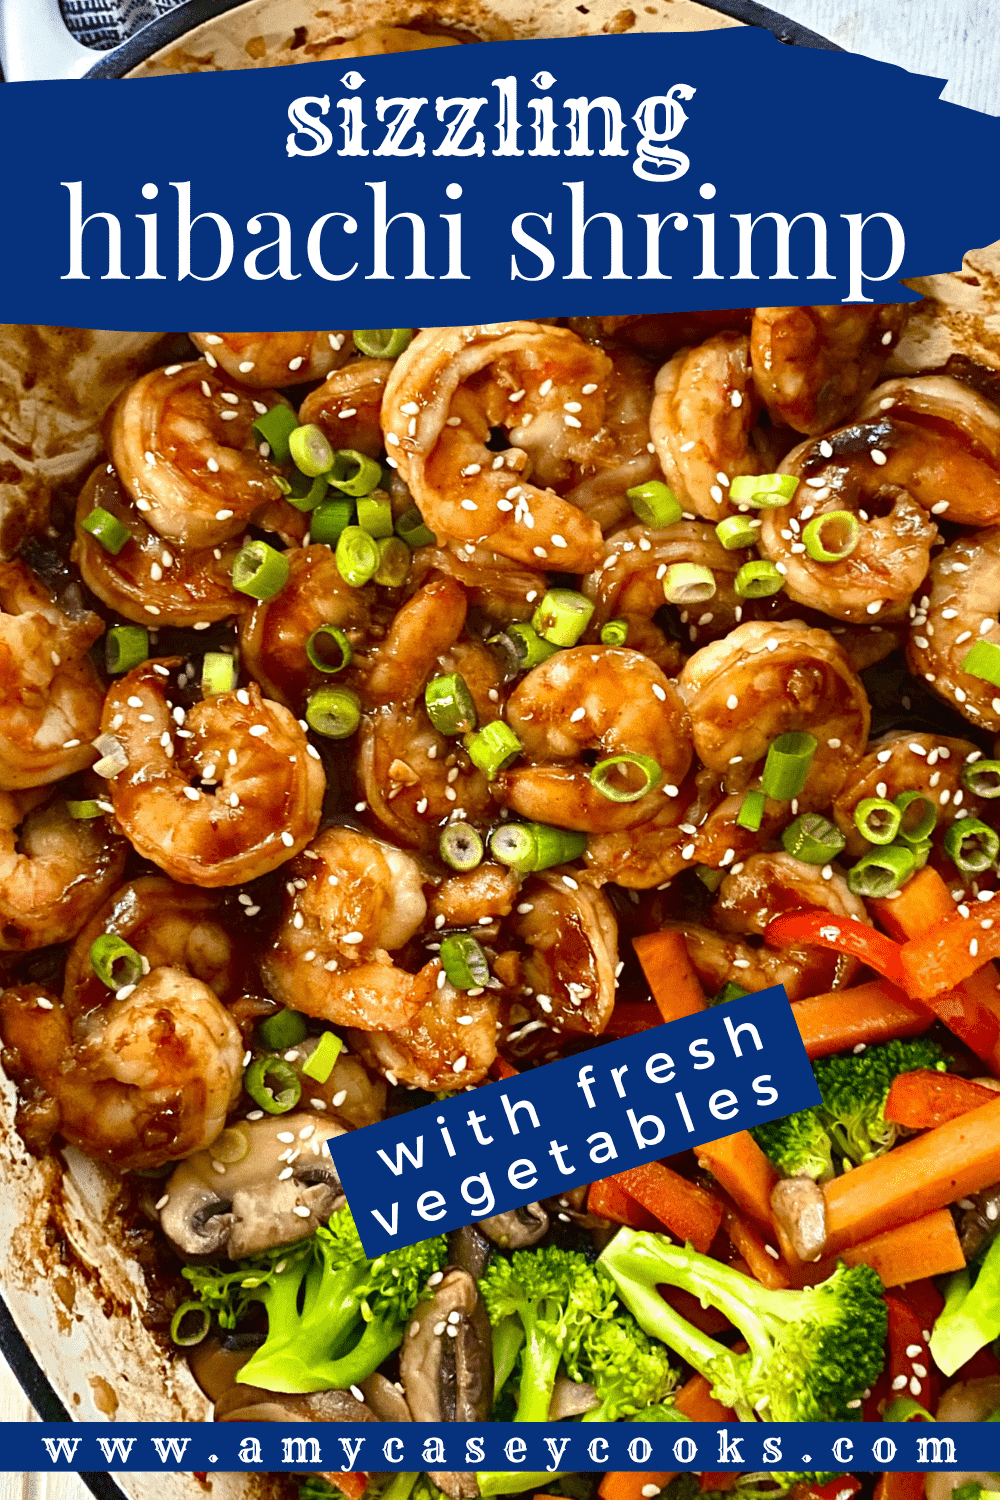 hibachi shrimp and vegetables.